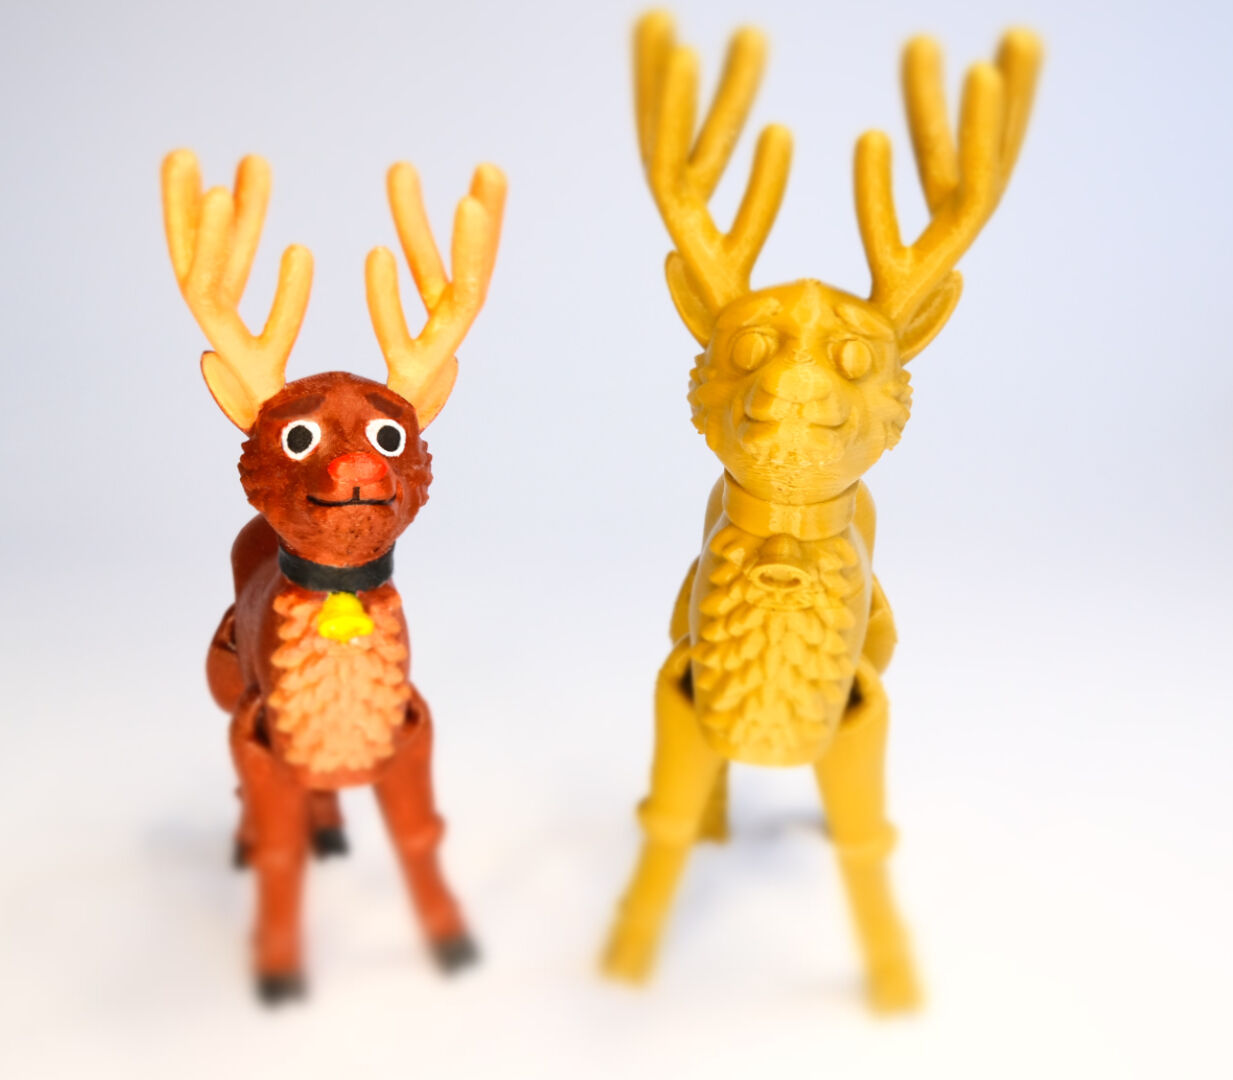 Bro Deer - Print-in-Place, 3D models download